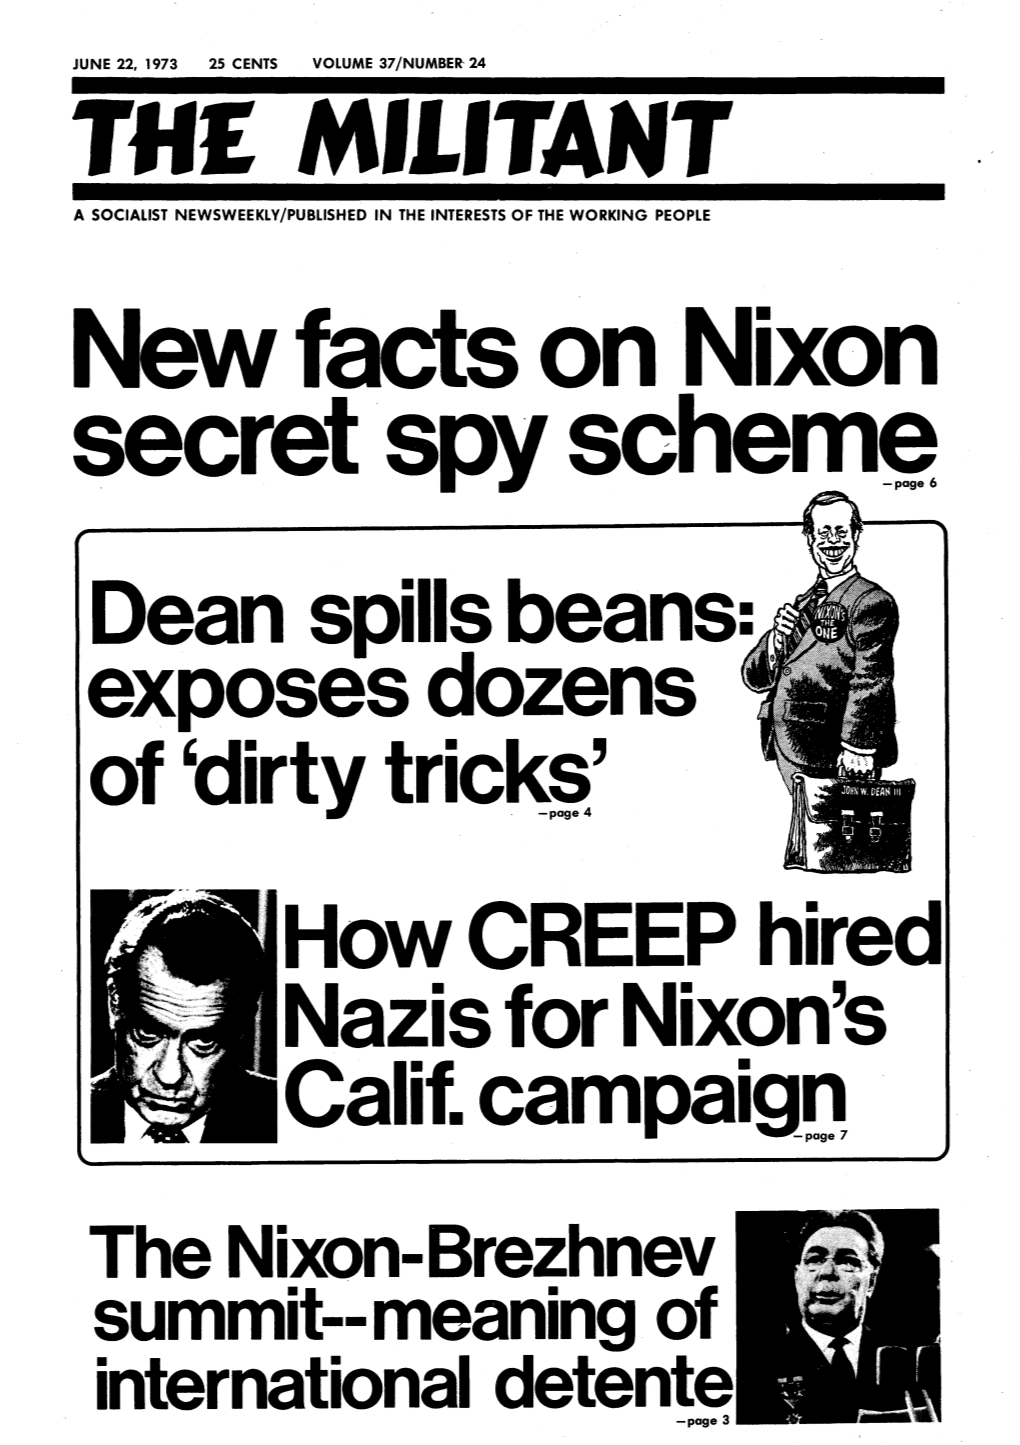 How CREEP Hired Nazis for Nixon's Calif